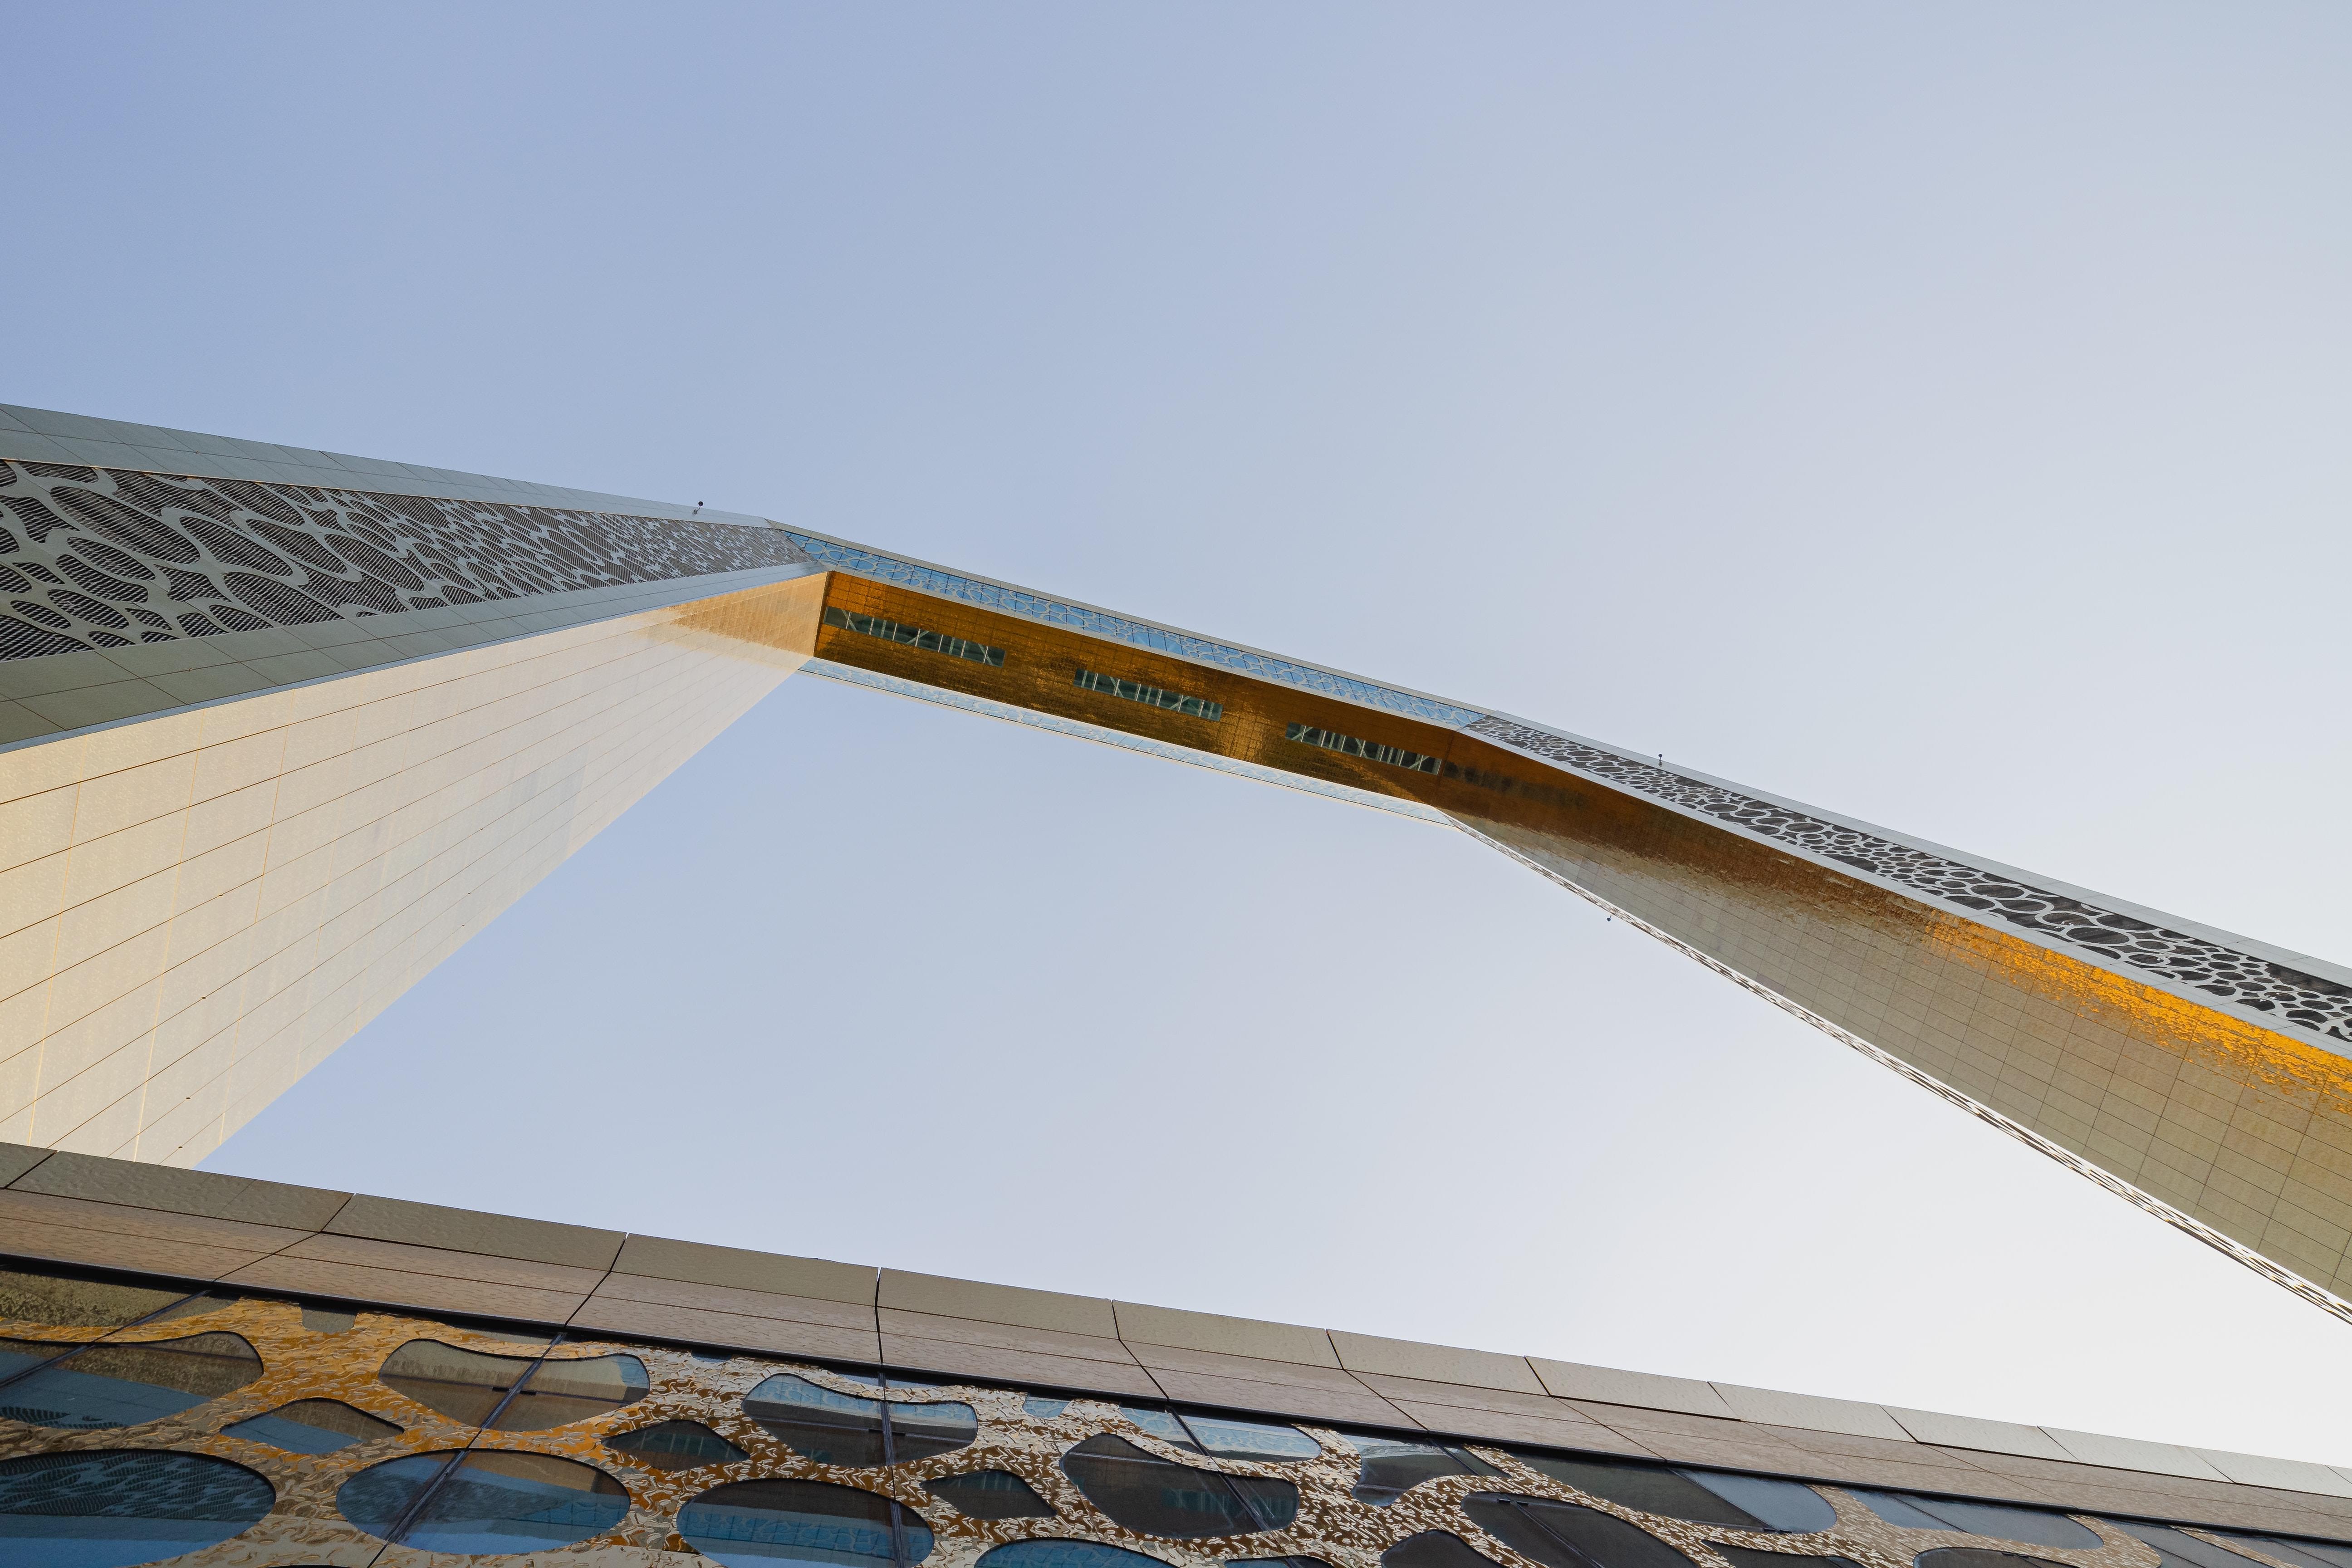 Step into the Future with Dubai Frame